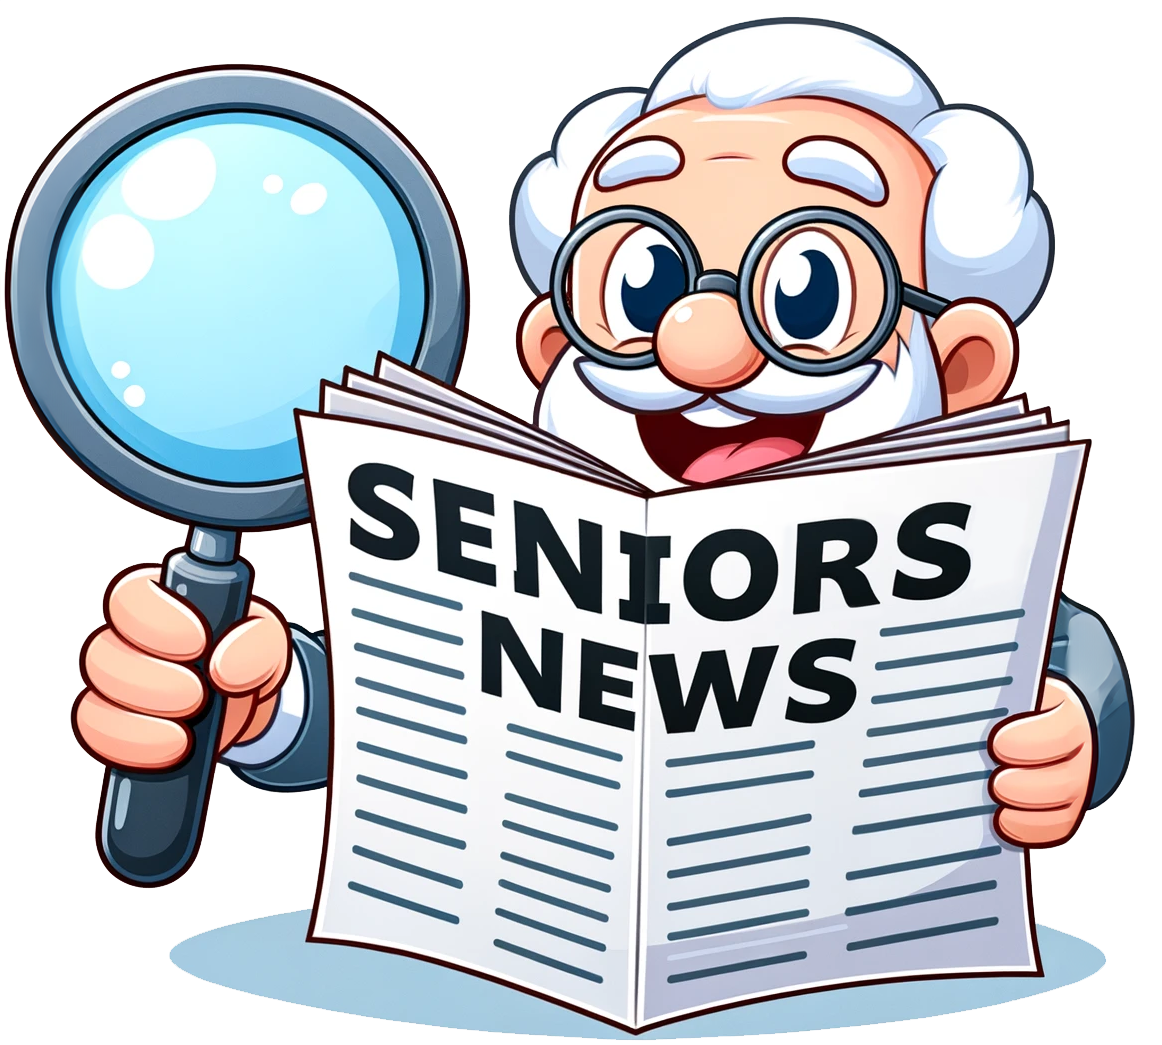 Seniors News